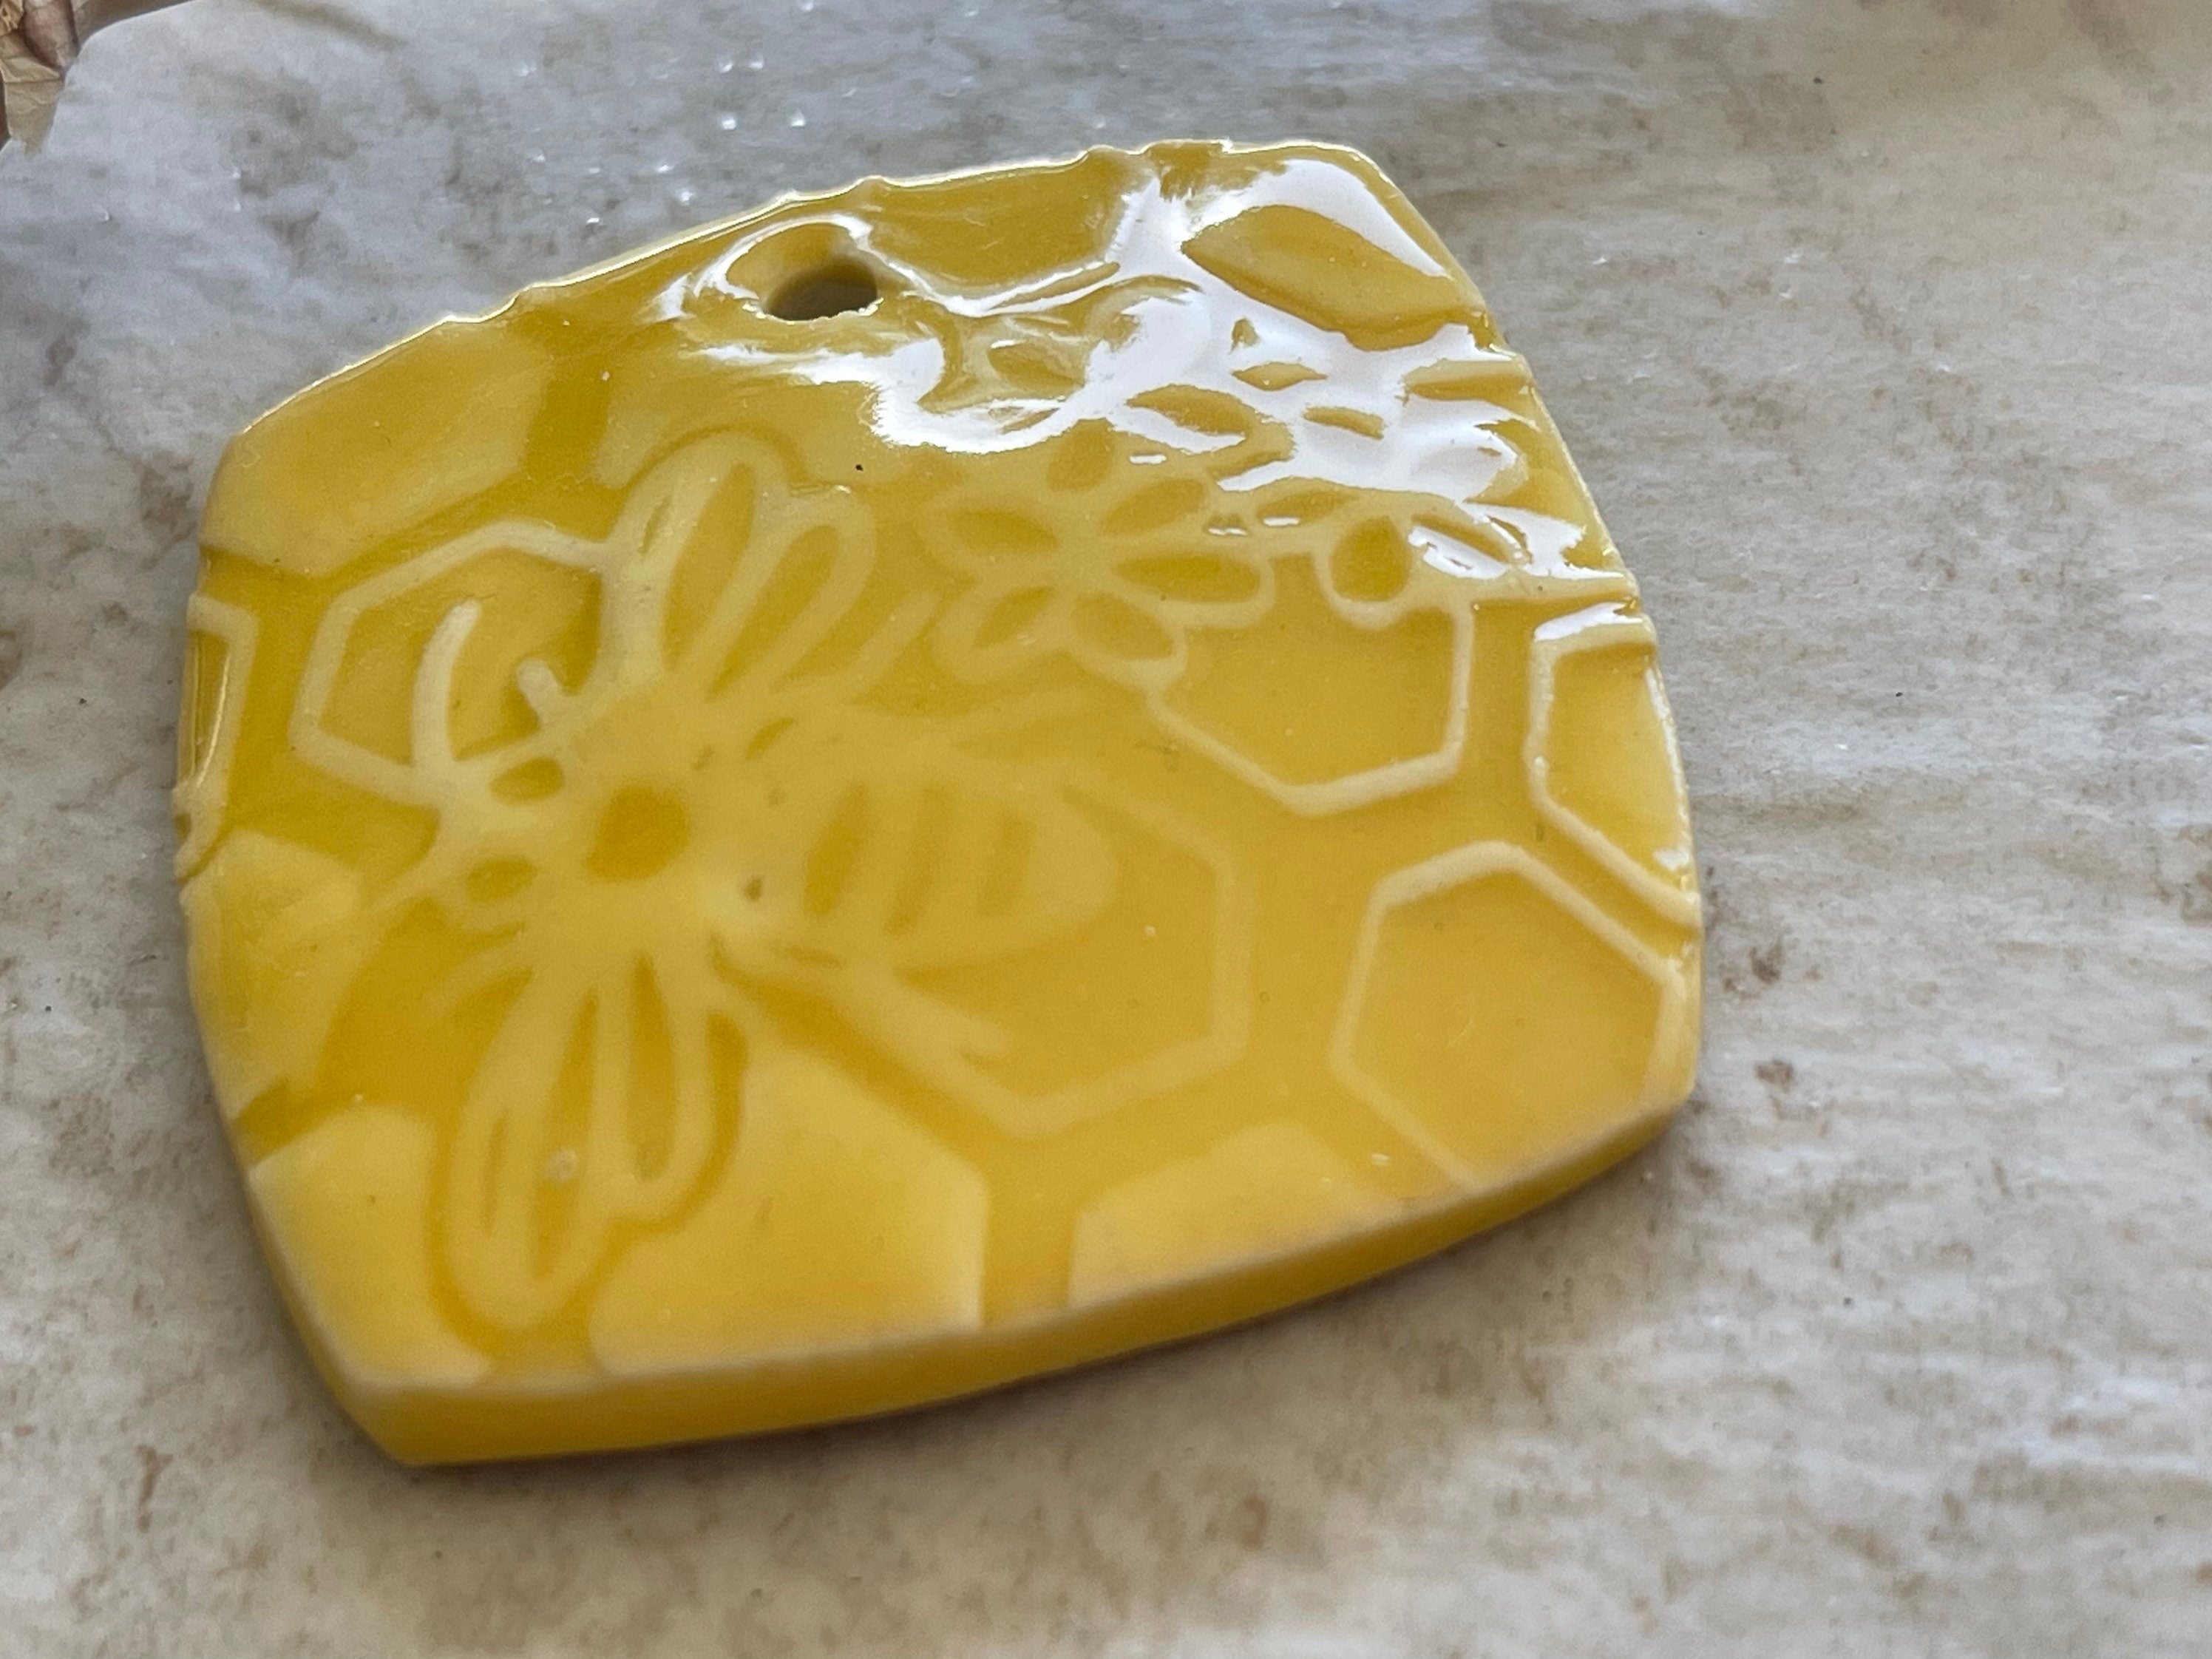 Bee Pendant, Yellow Pendant, Porcelain Ceramic Pendant, Jewelry Making Components